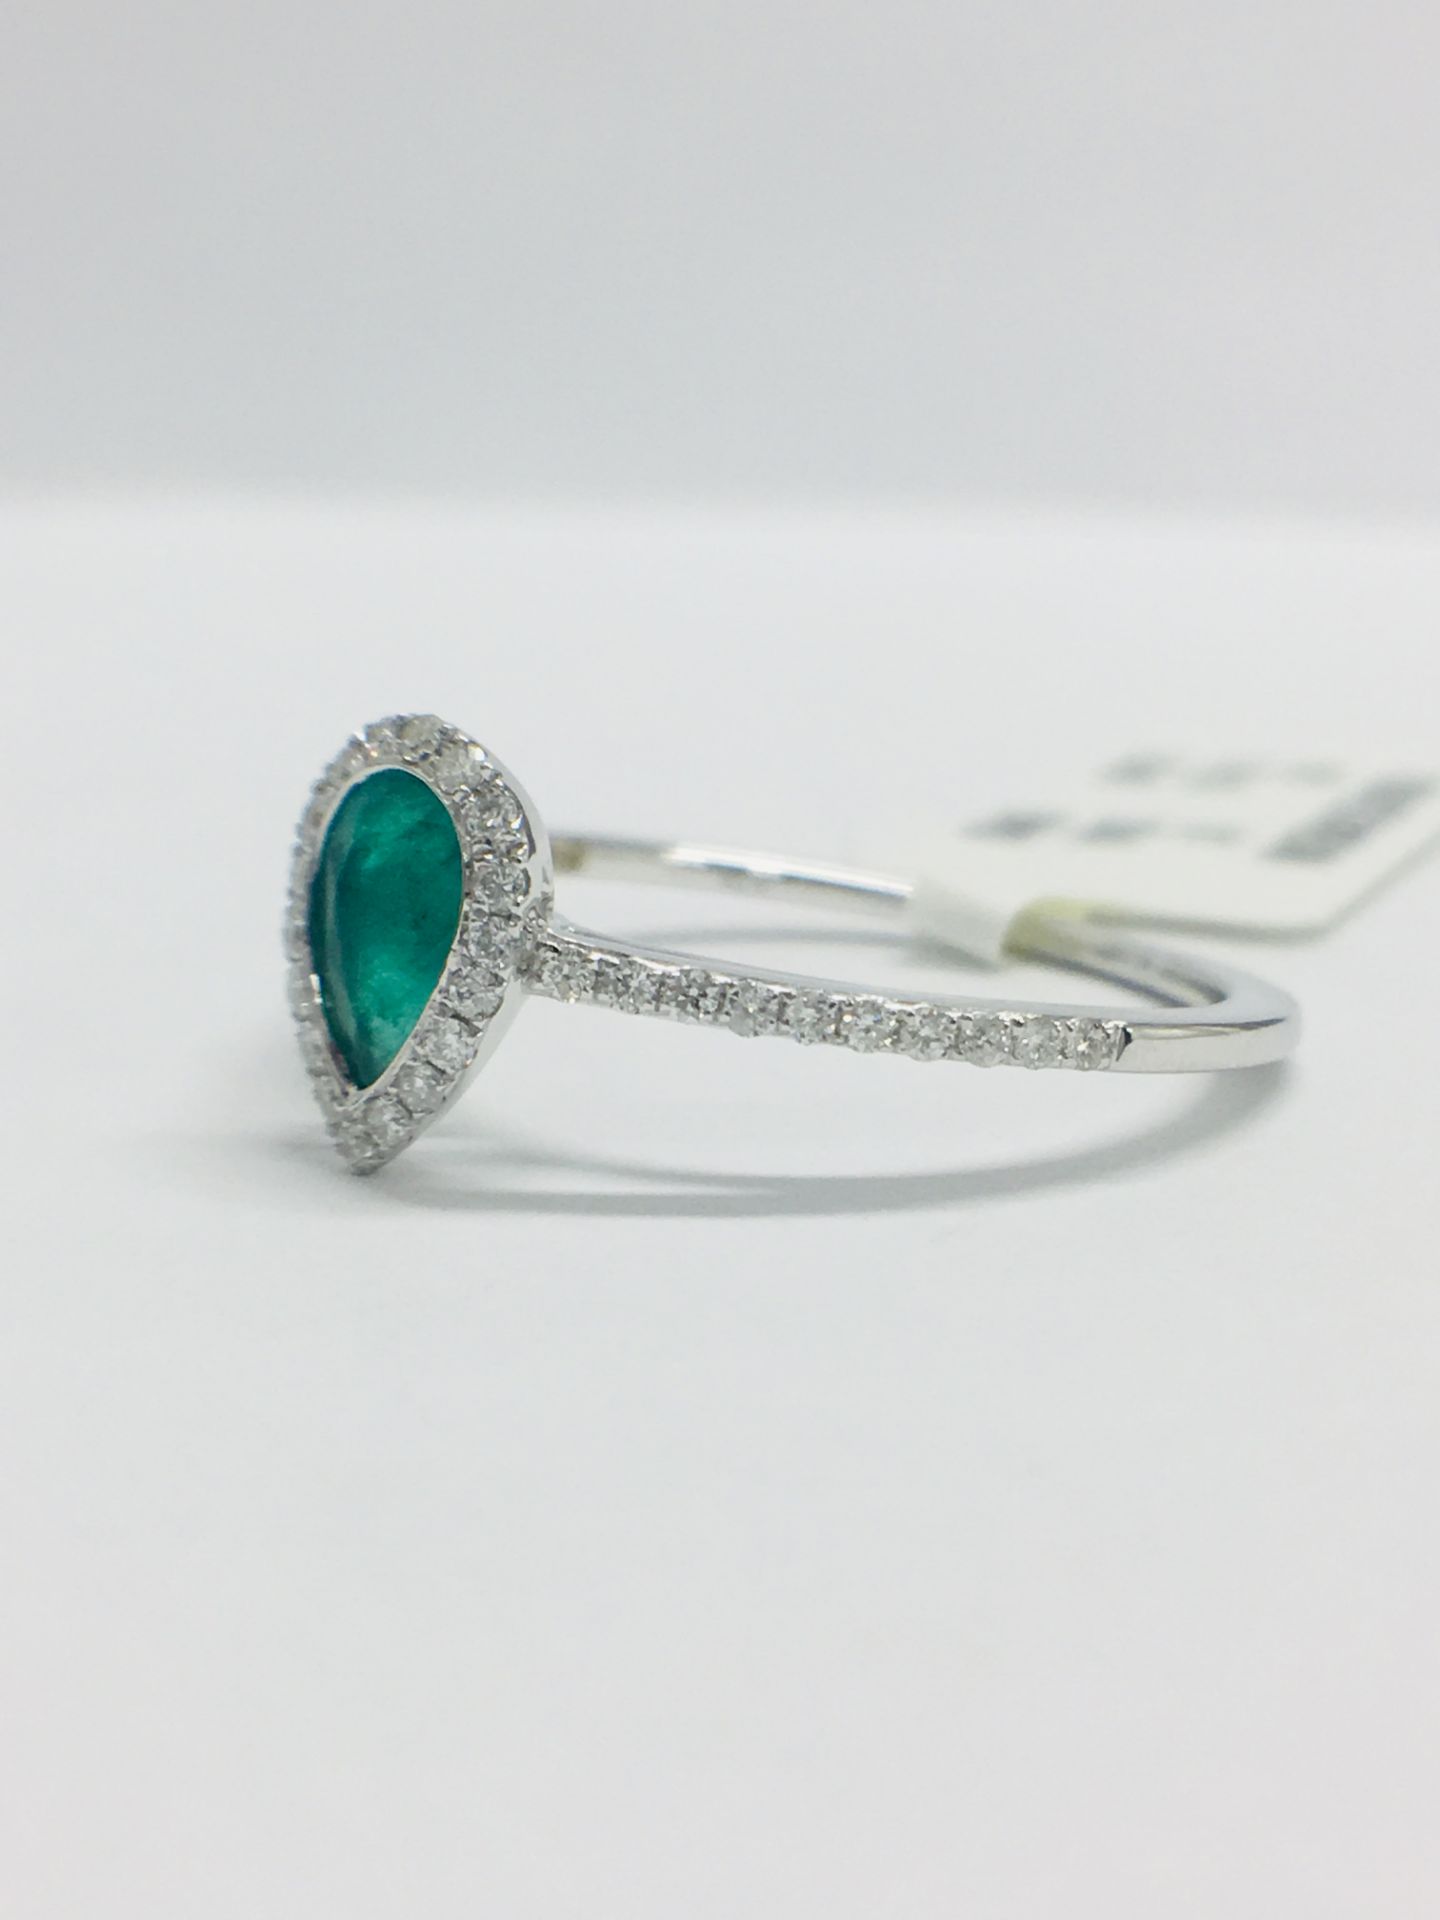 9ct White Pearshape Emerald Diamond Ring - Image 2 of 11